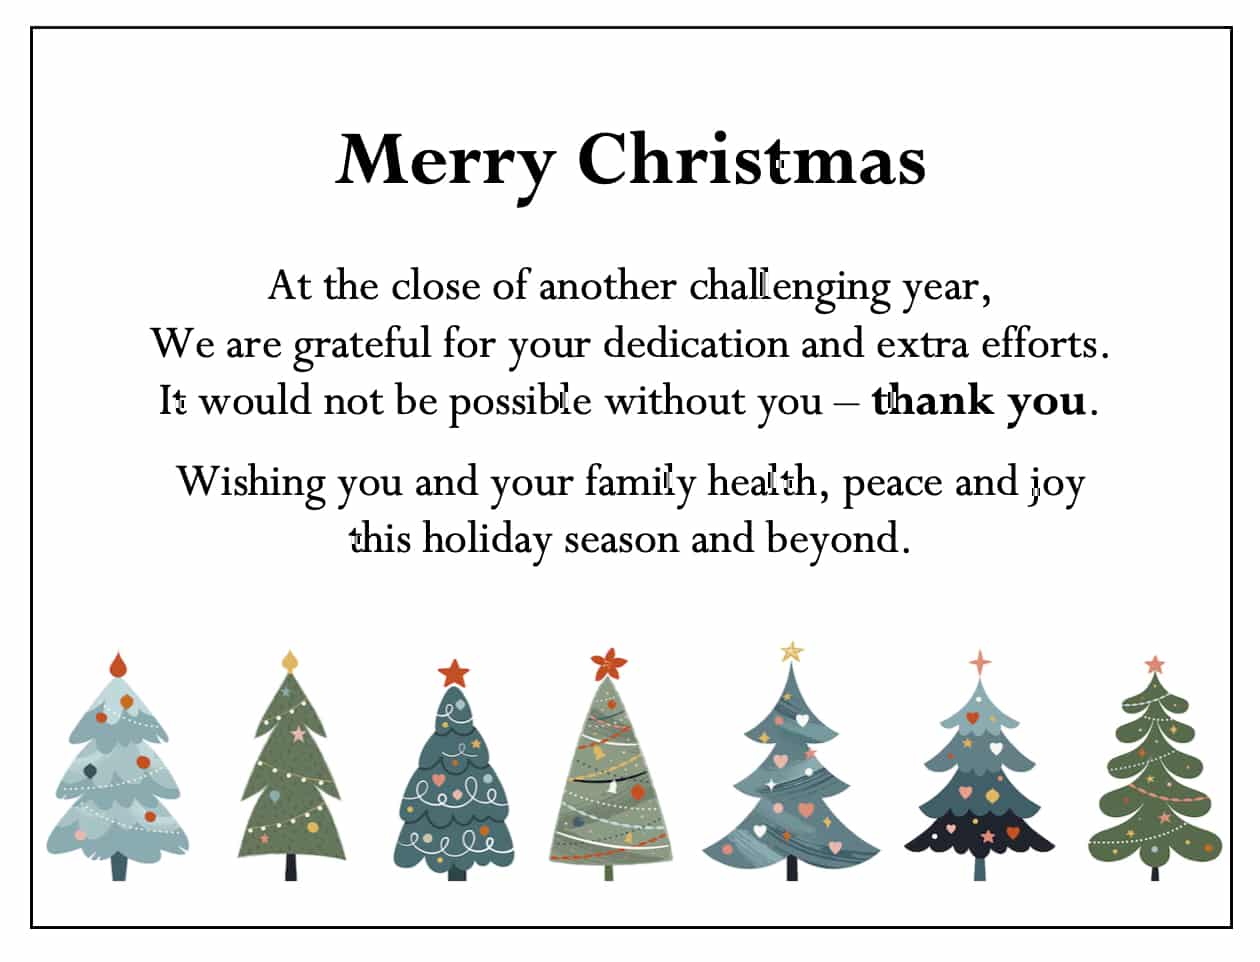  gThankYou Employee Gifts - Christmas Enclosure Card - Christmas Trees